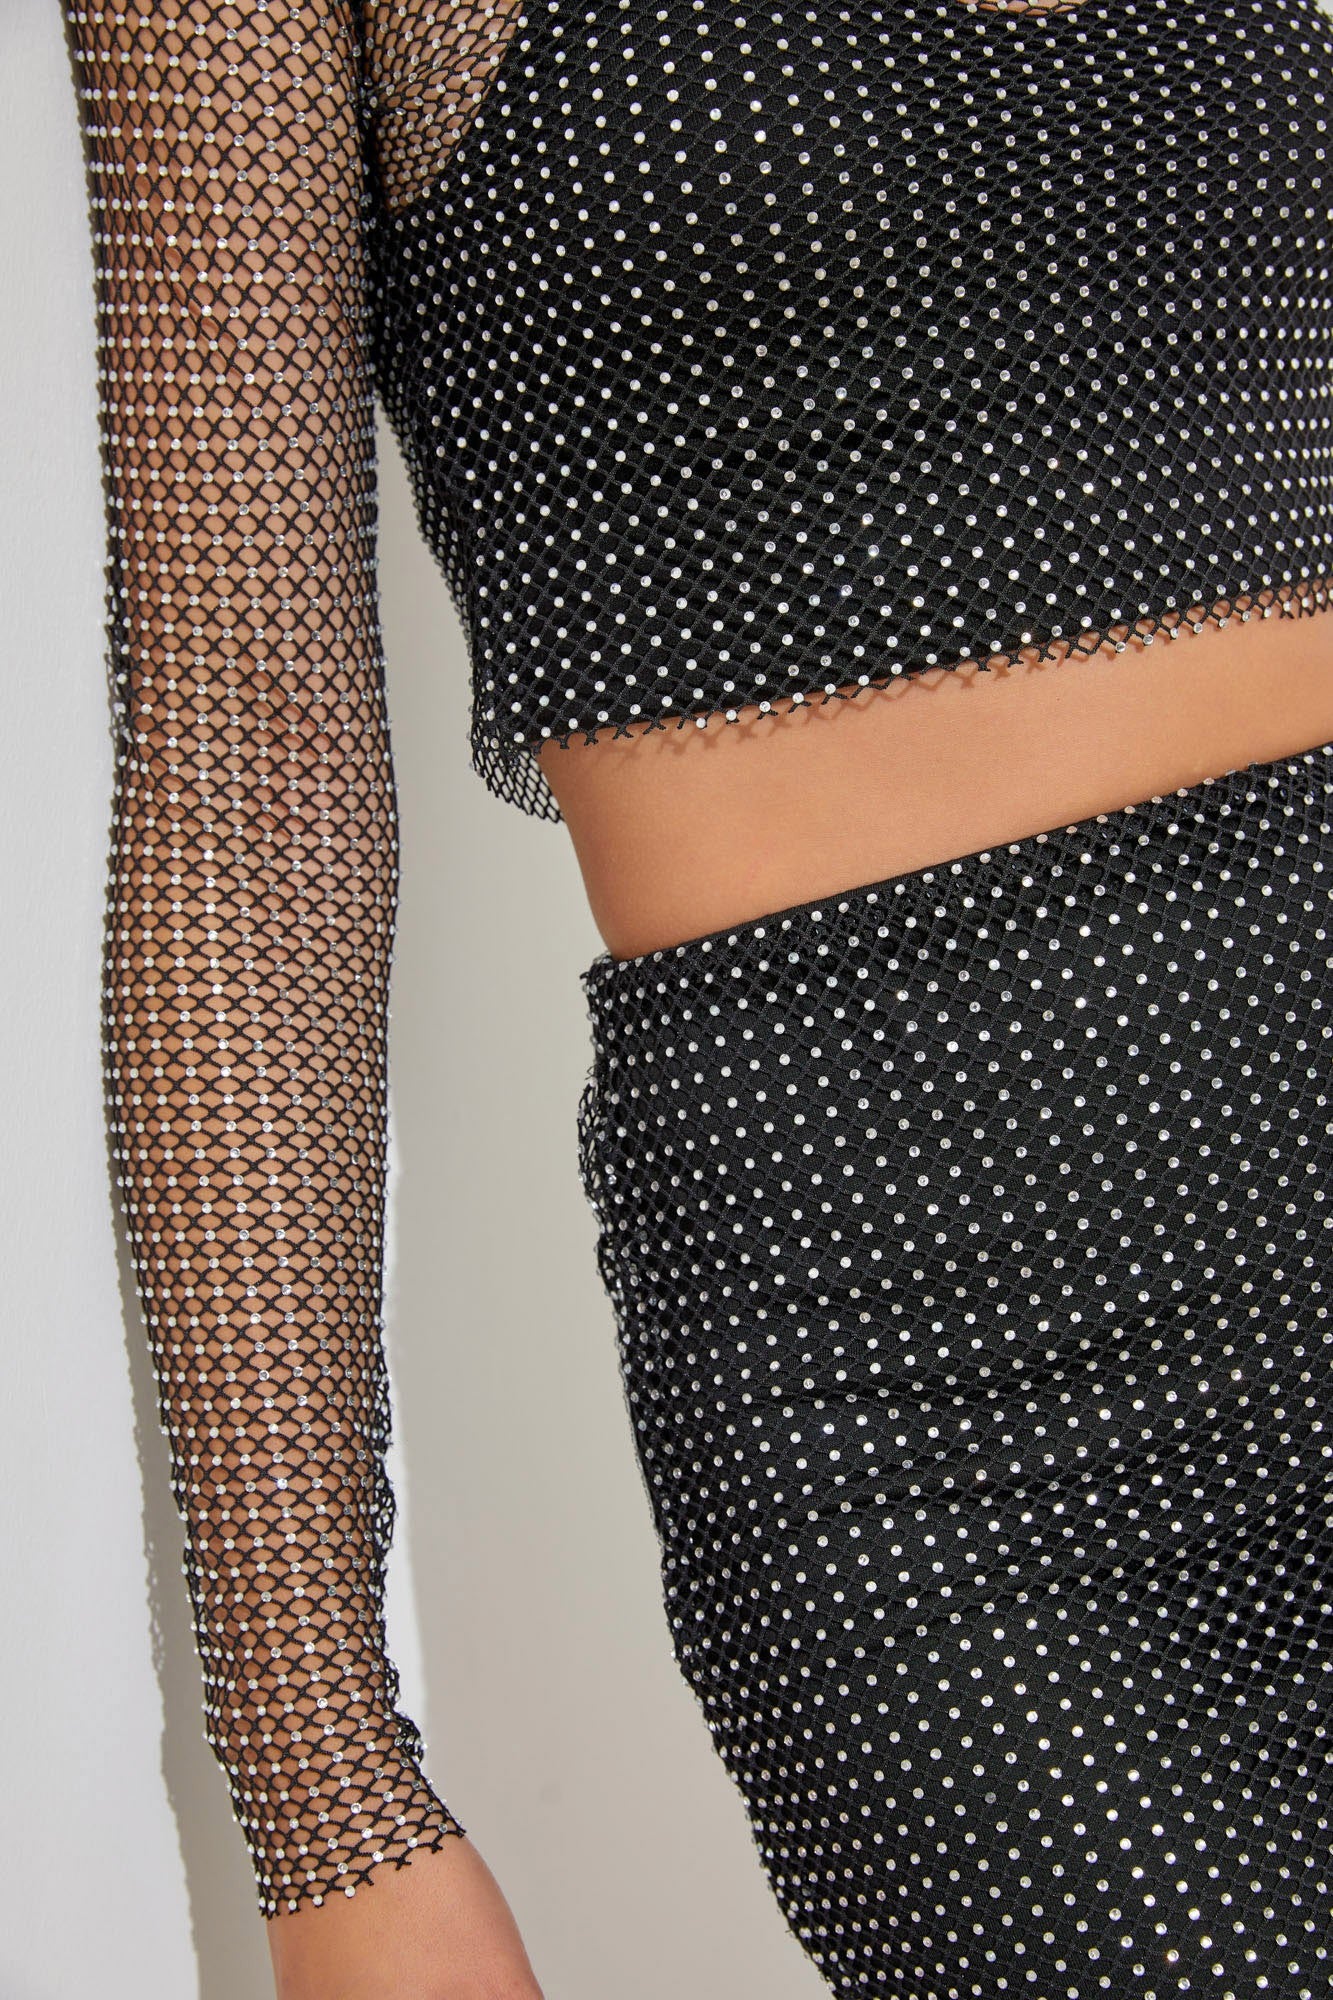 netting rhinestone studded mini skirt